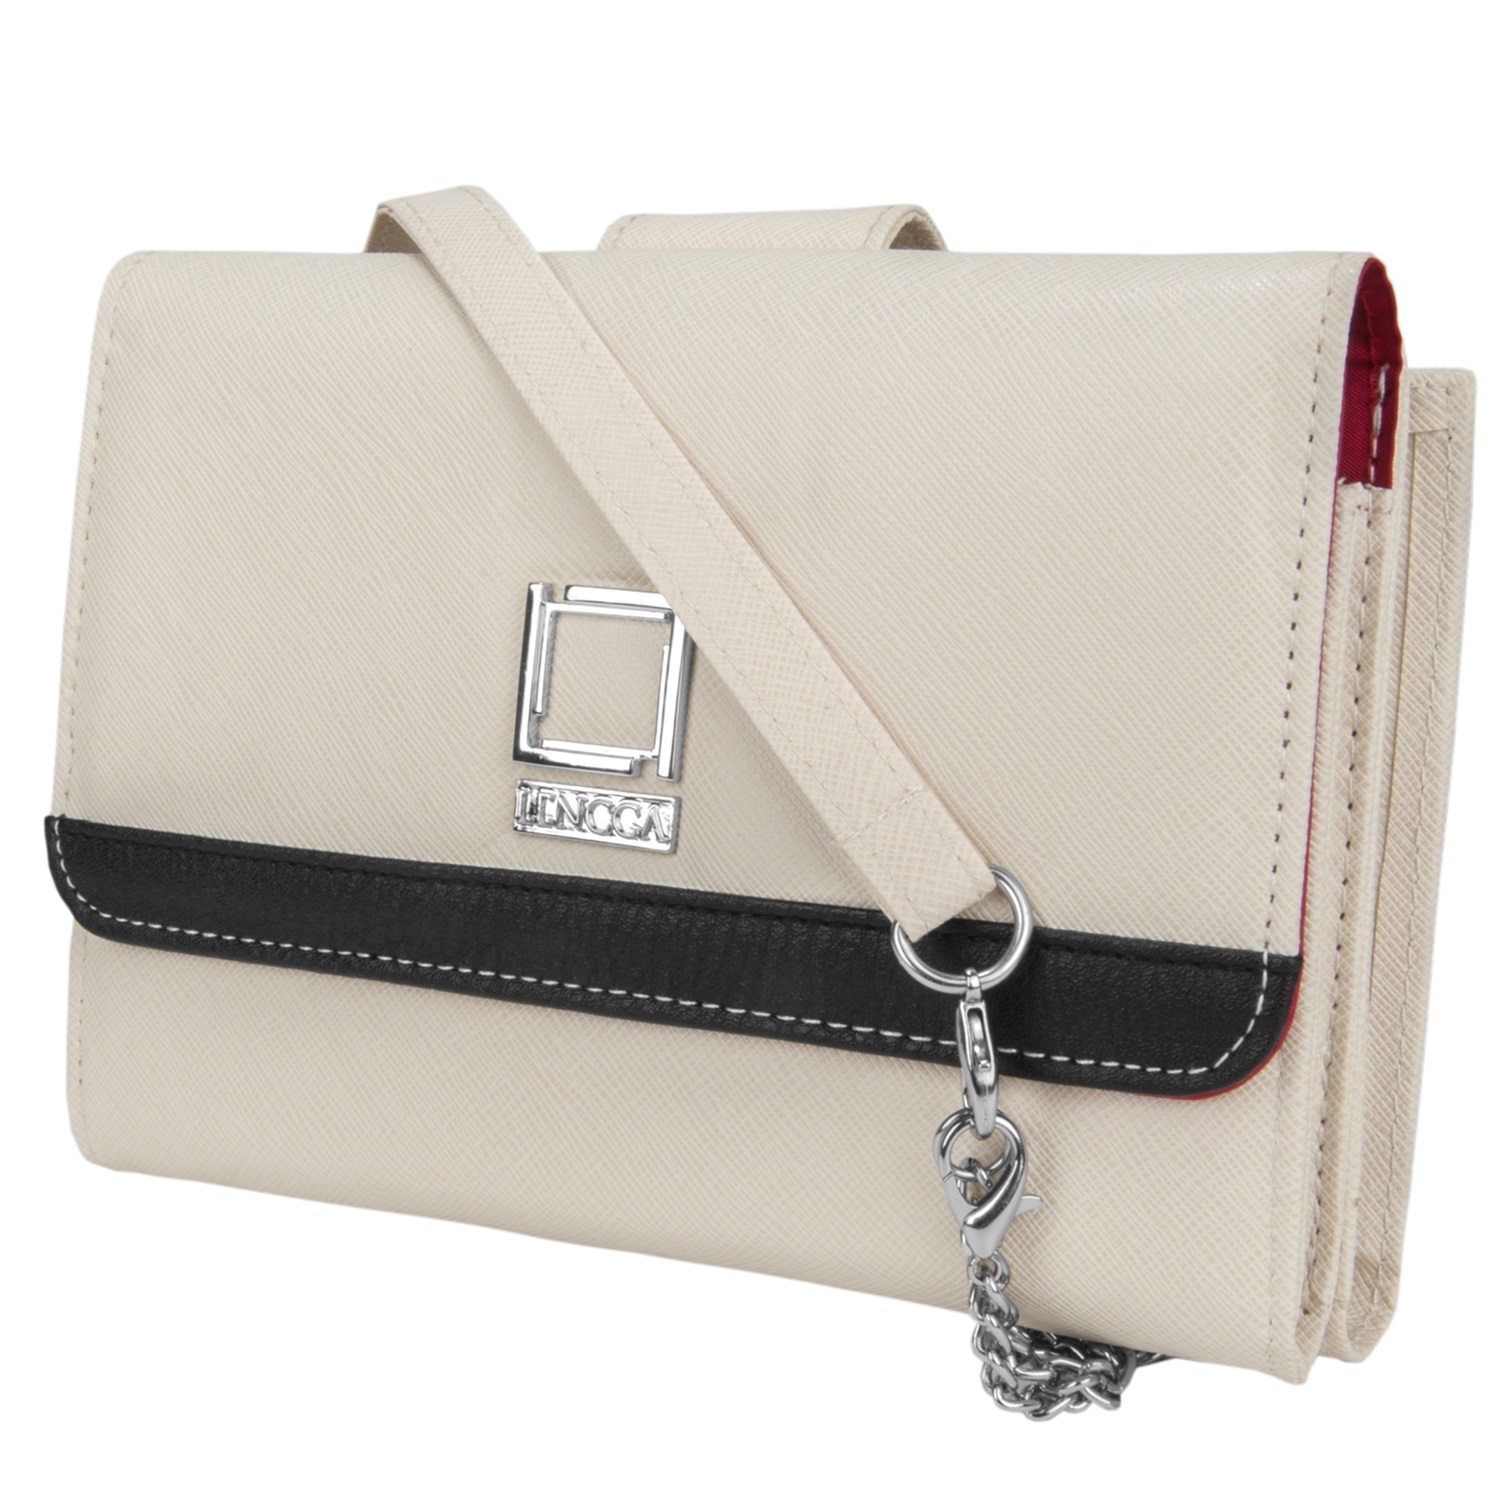 Lencca Nikina Woman’s Clutch Crossbody Fashion Handbag w/ Shoulder Strap fits Samsung Phones up to 6.1in x 3in